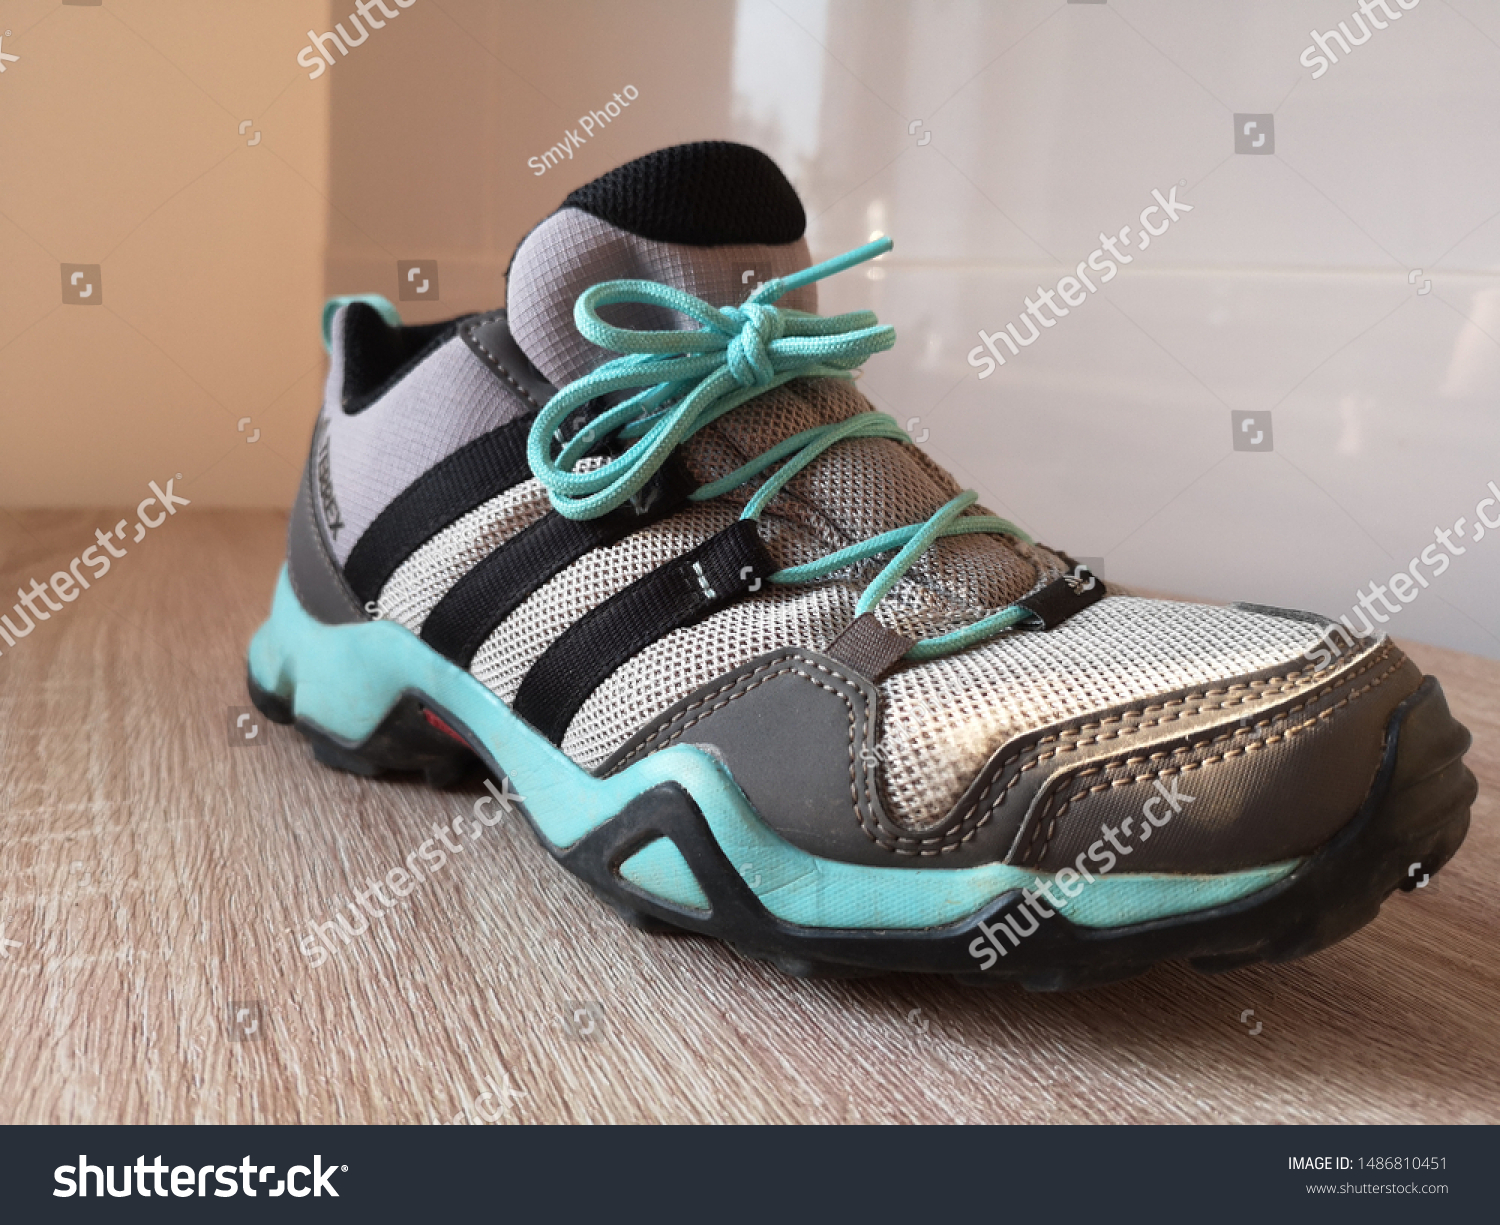 trekking adidas shoes